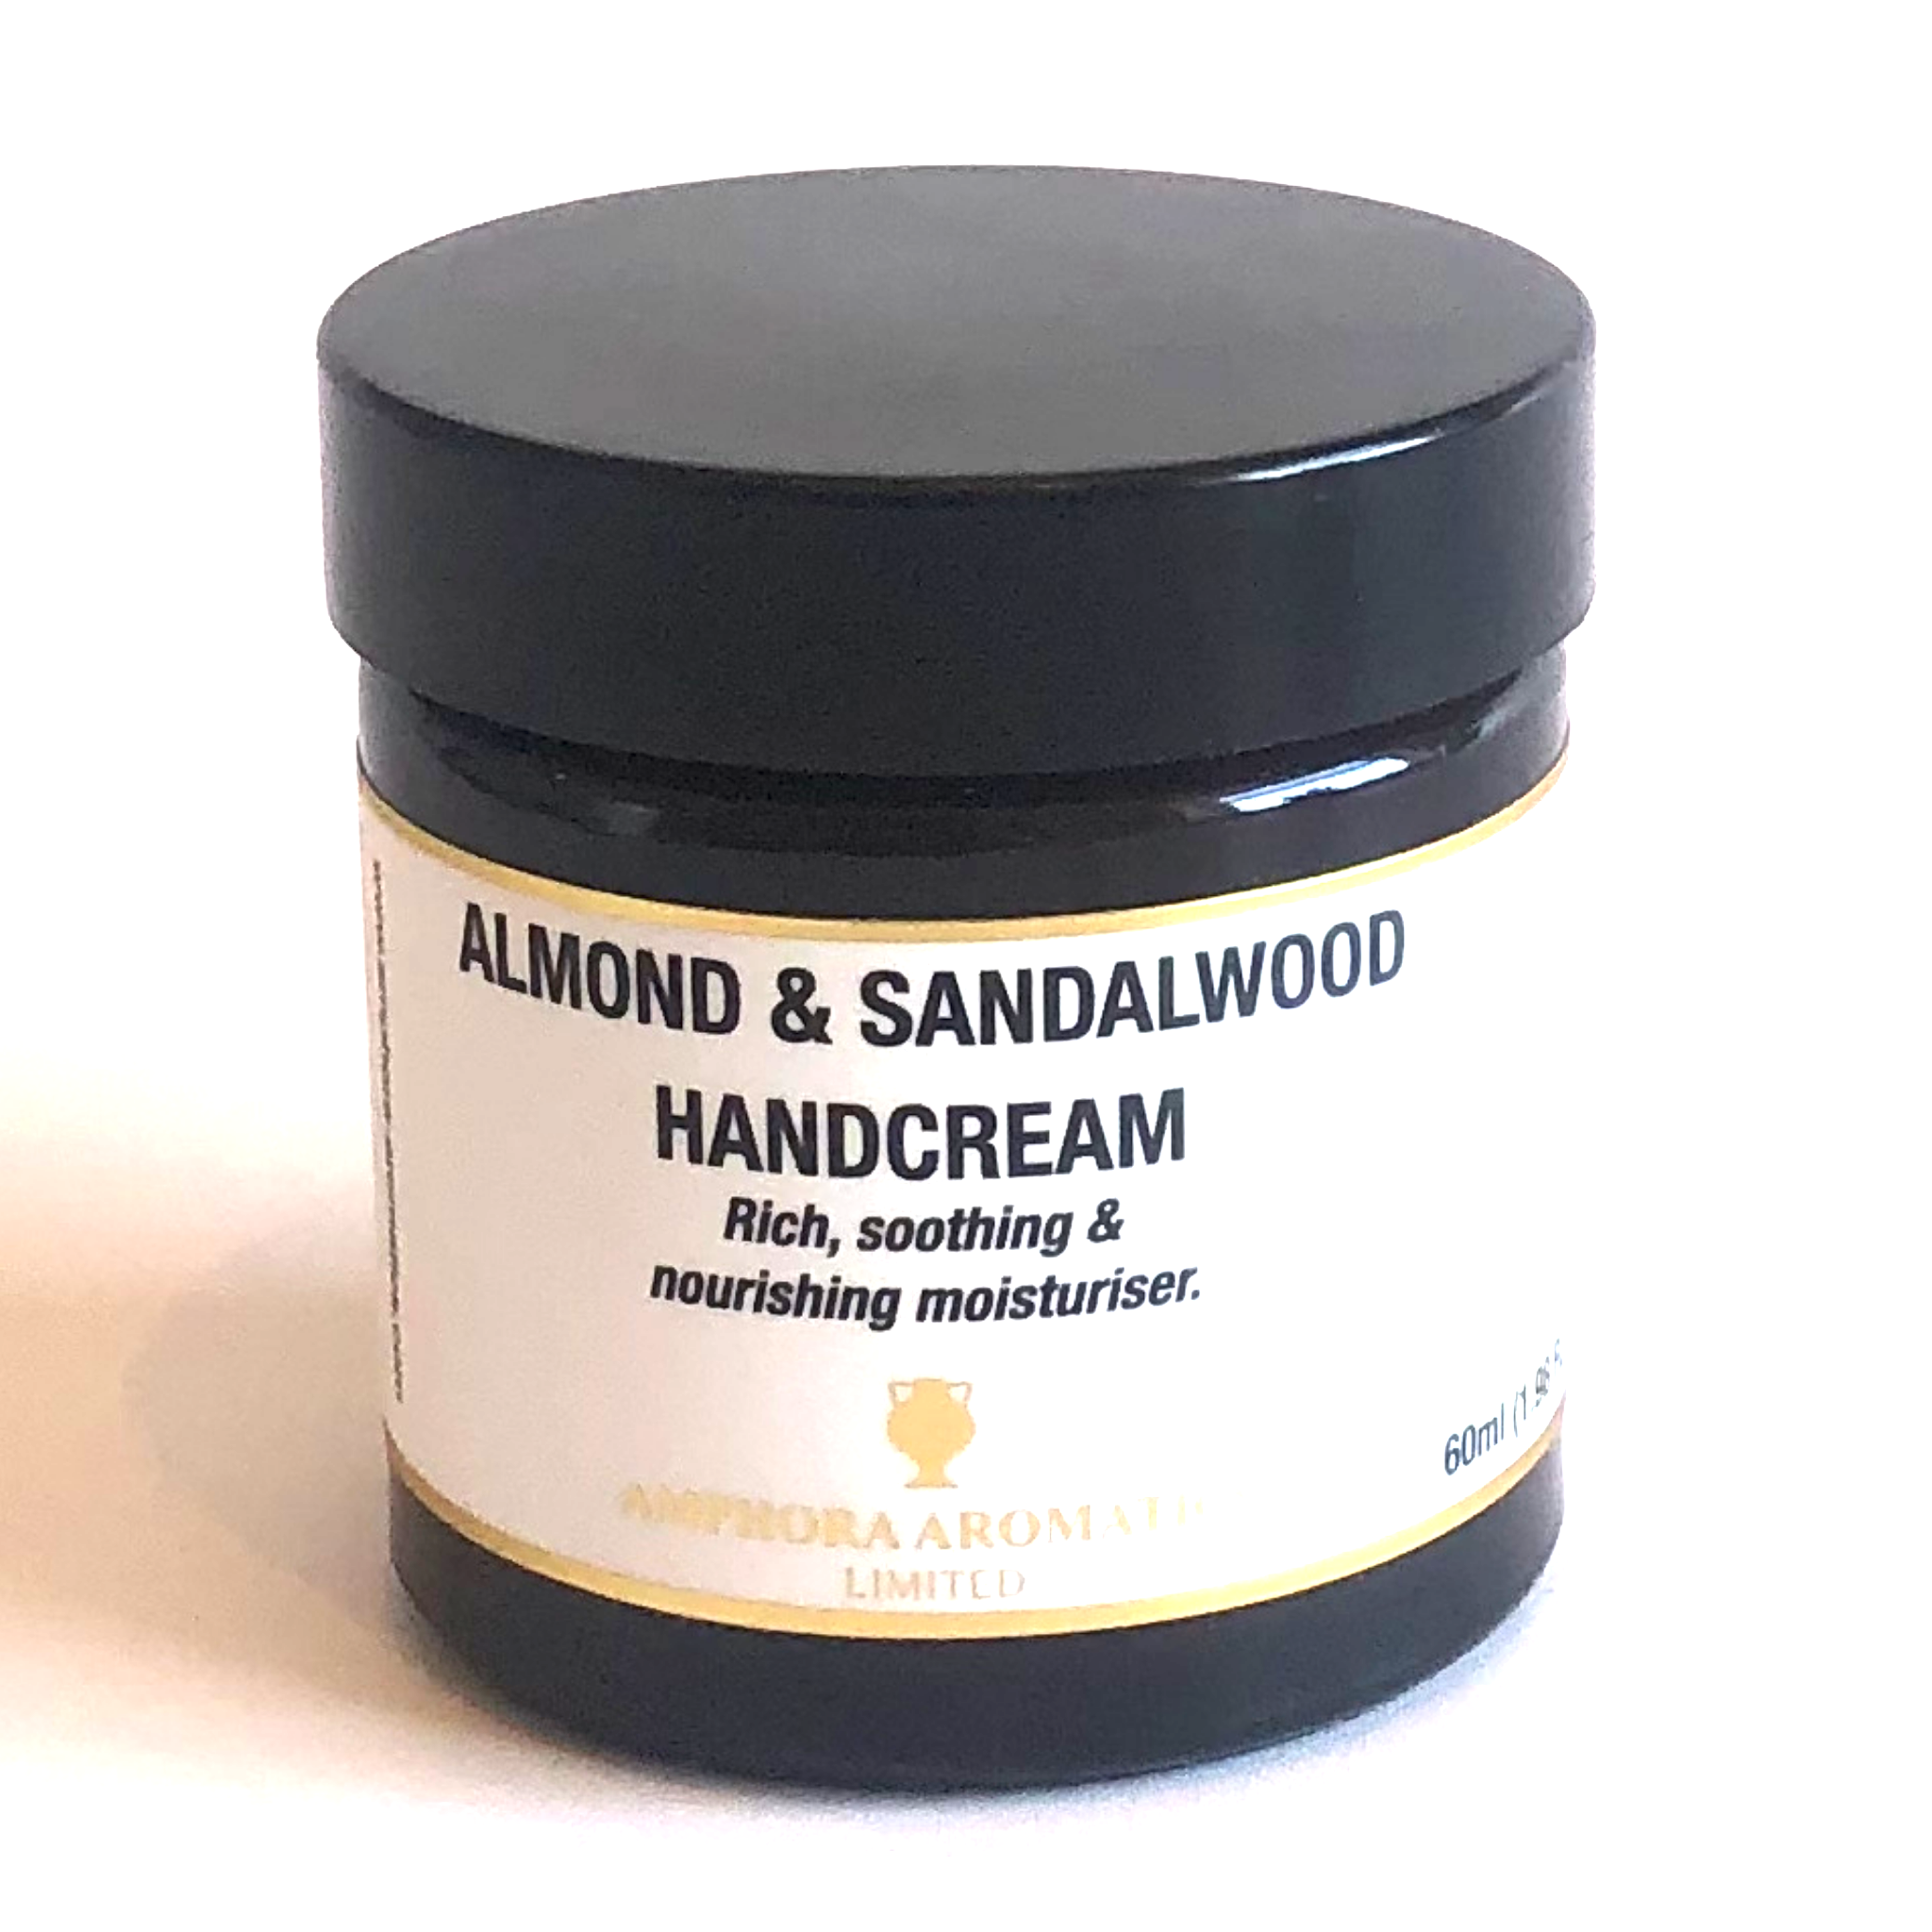 Almond & Sandalwood Hand Cream by Amphora Aromatics